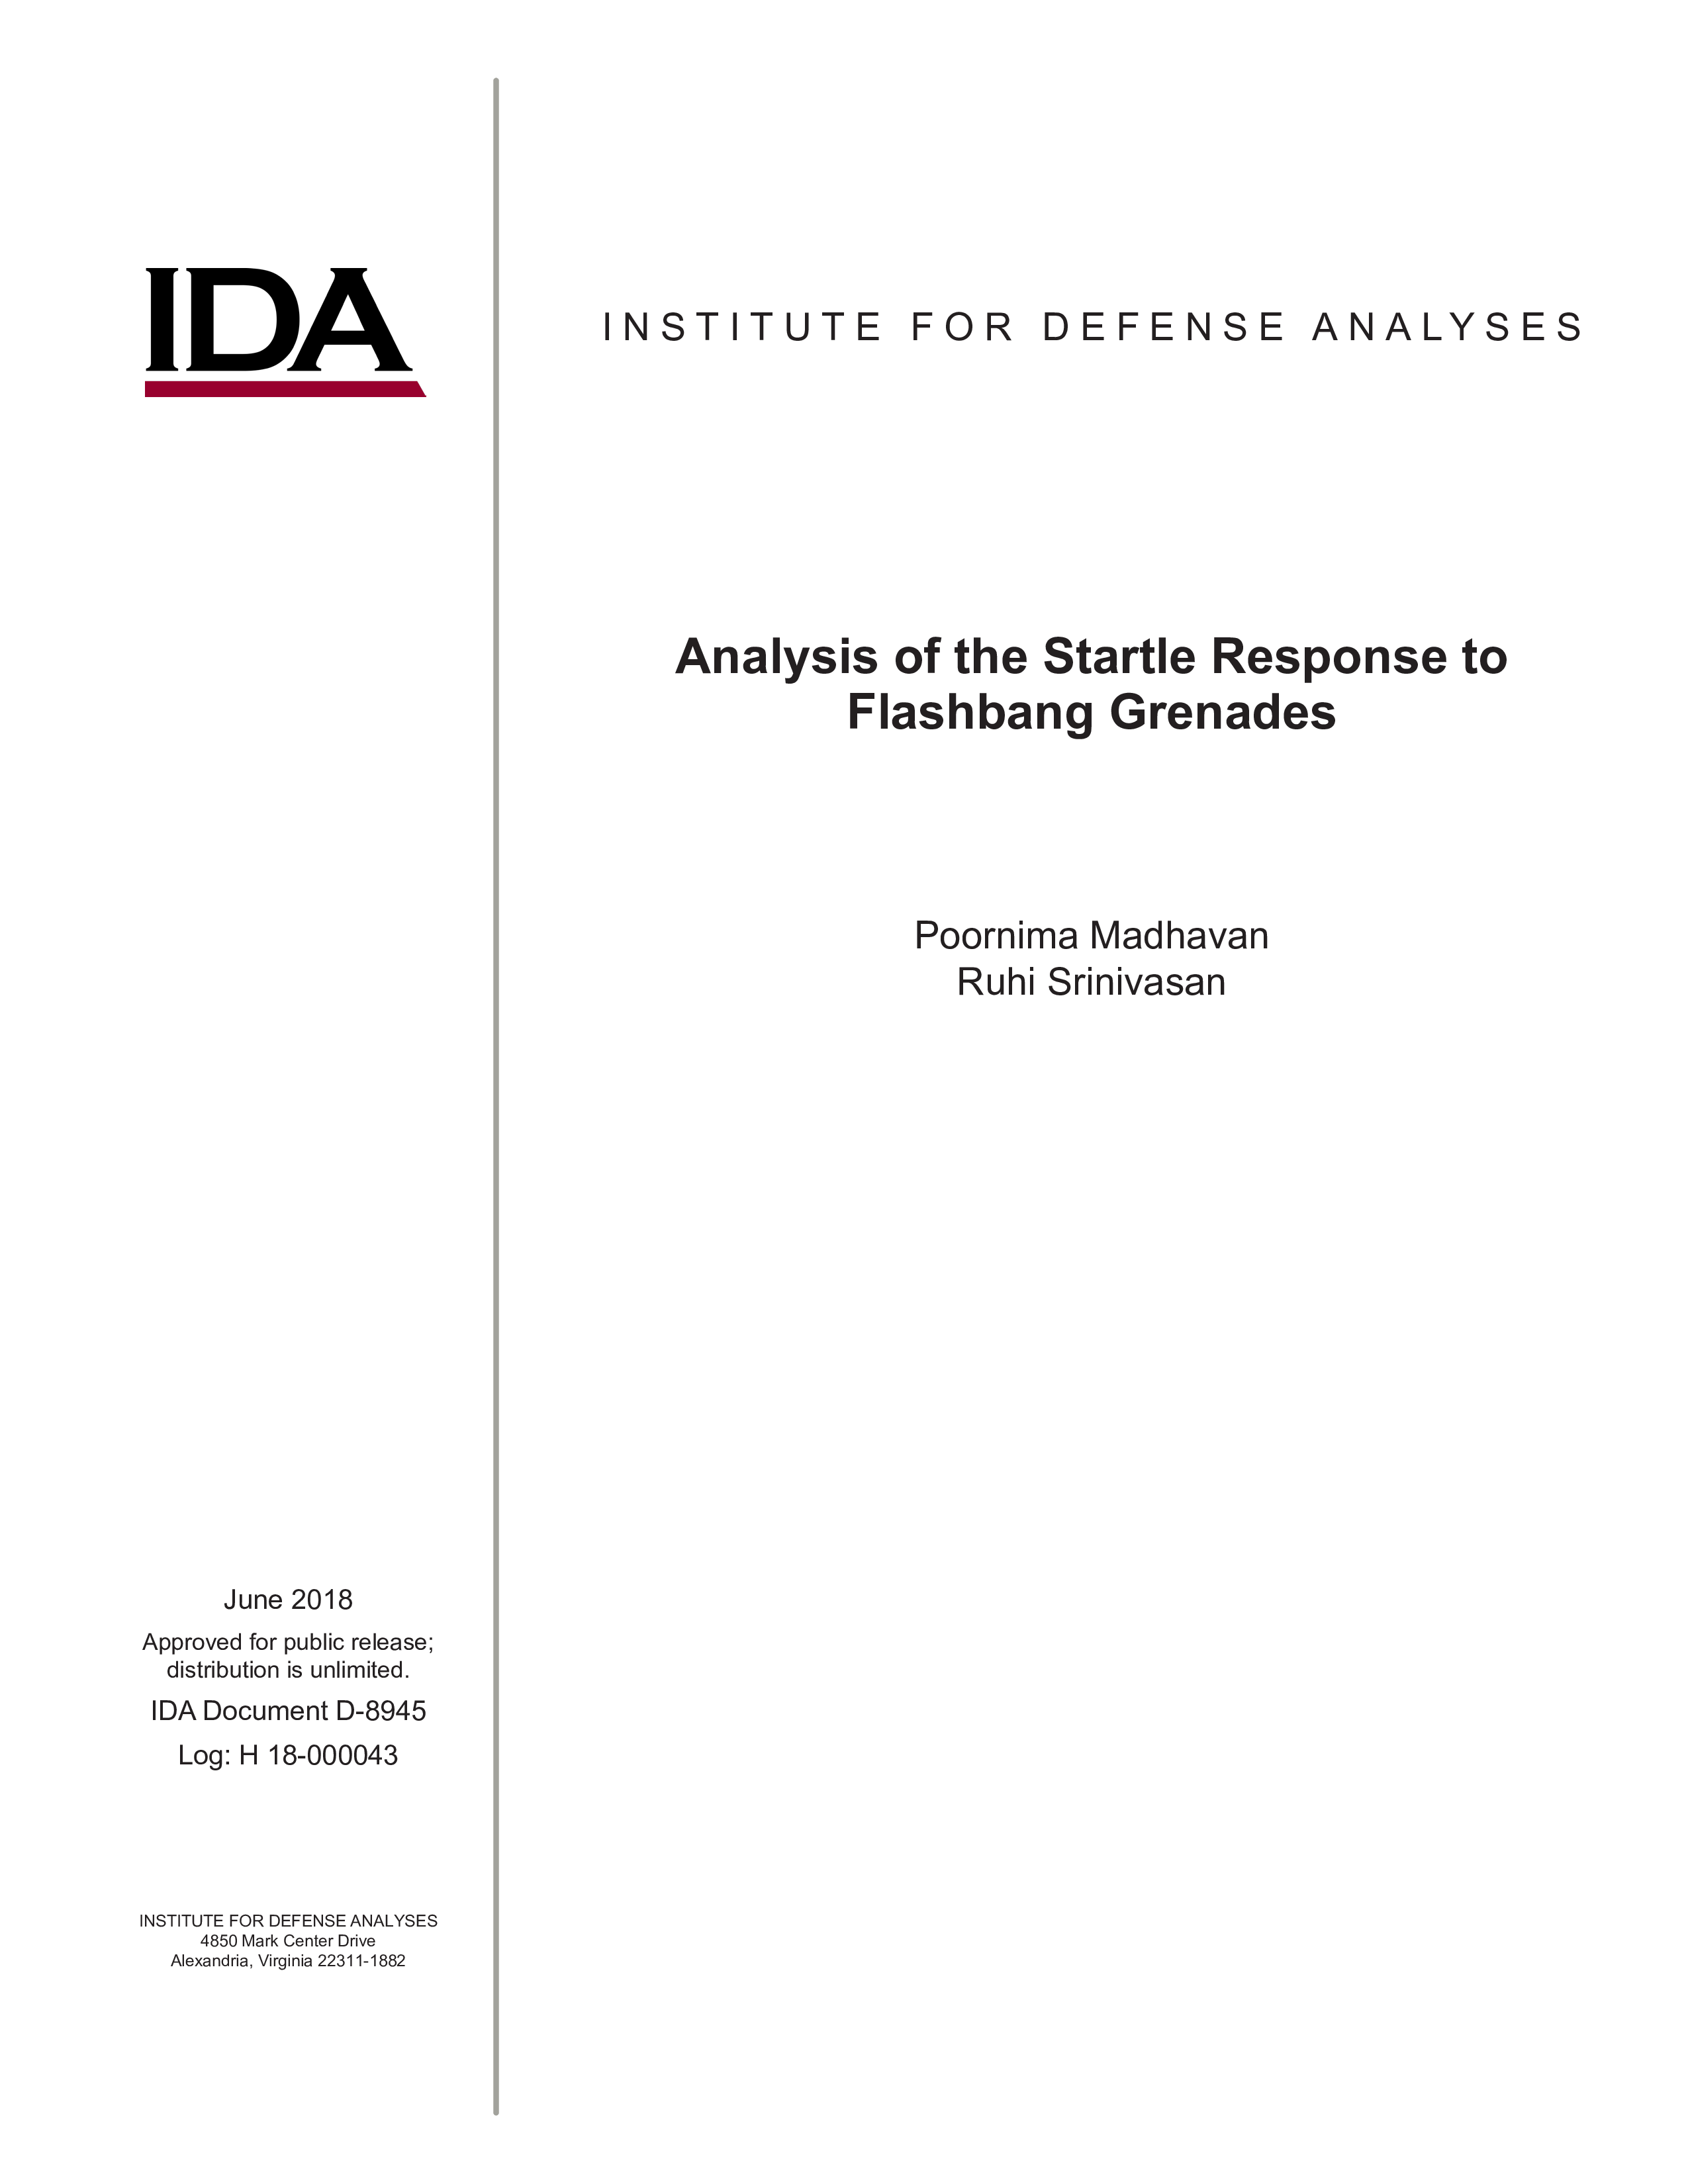 Analysis of the Startle Response to Flashbang Grenades